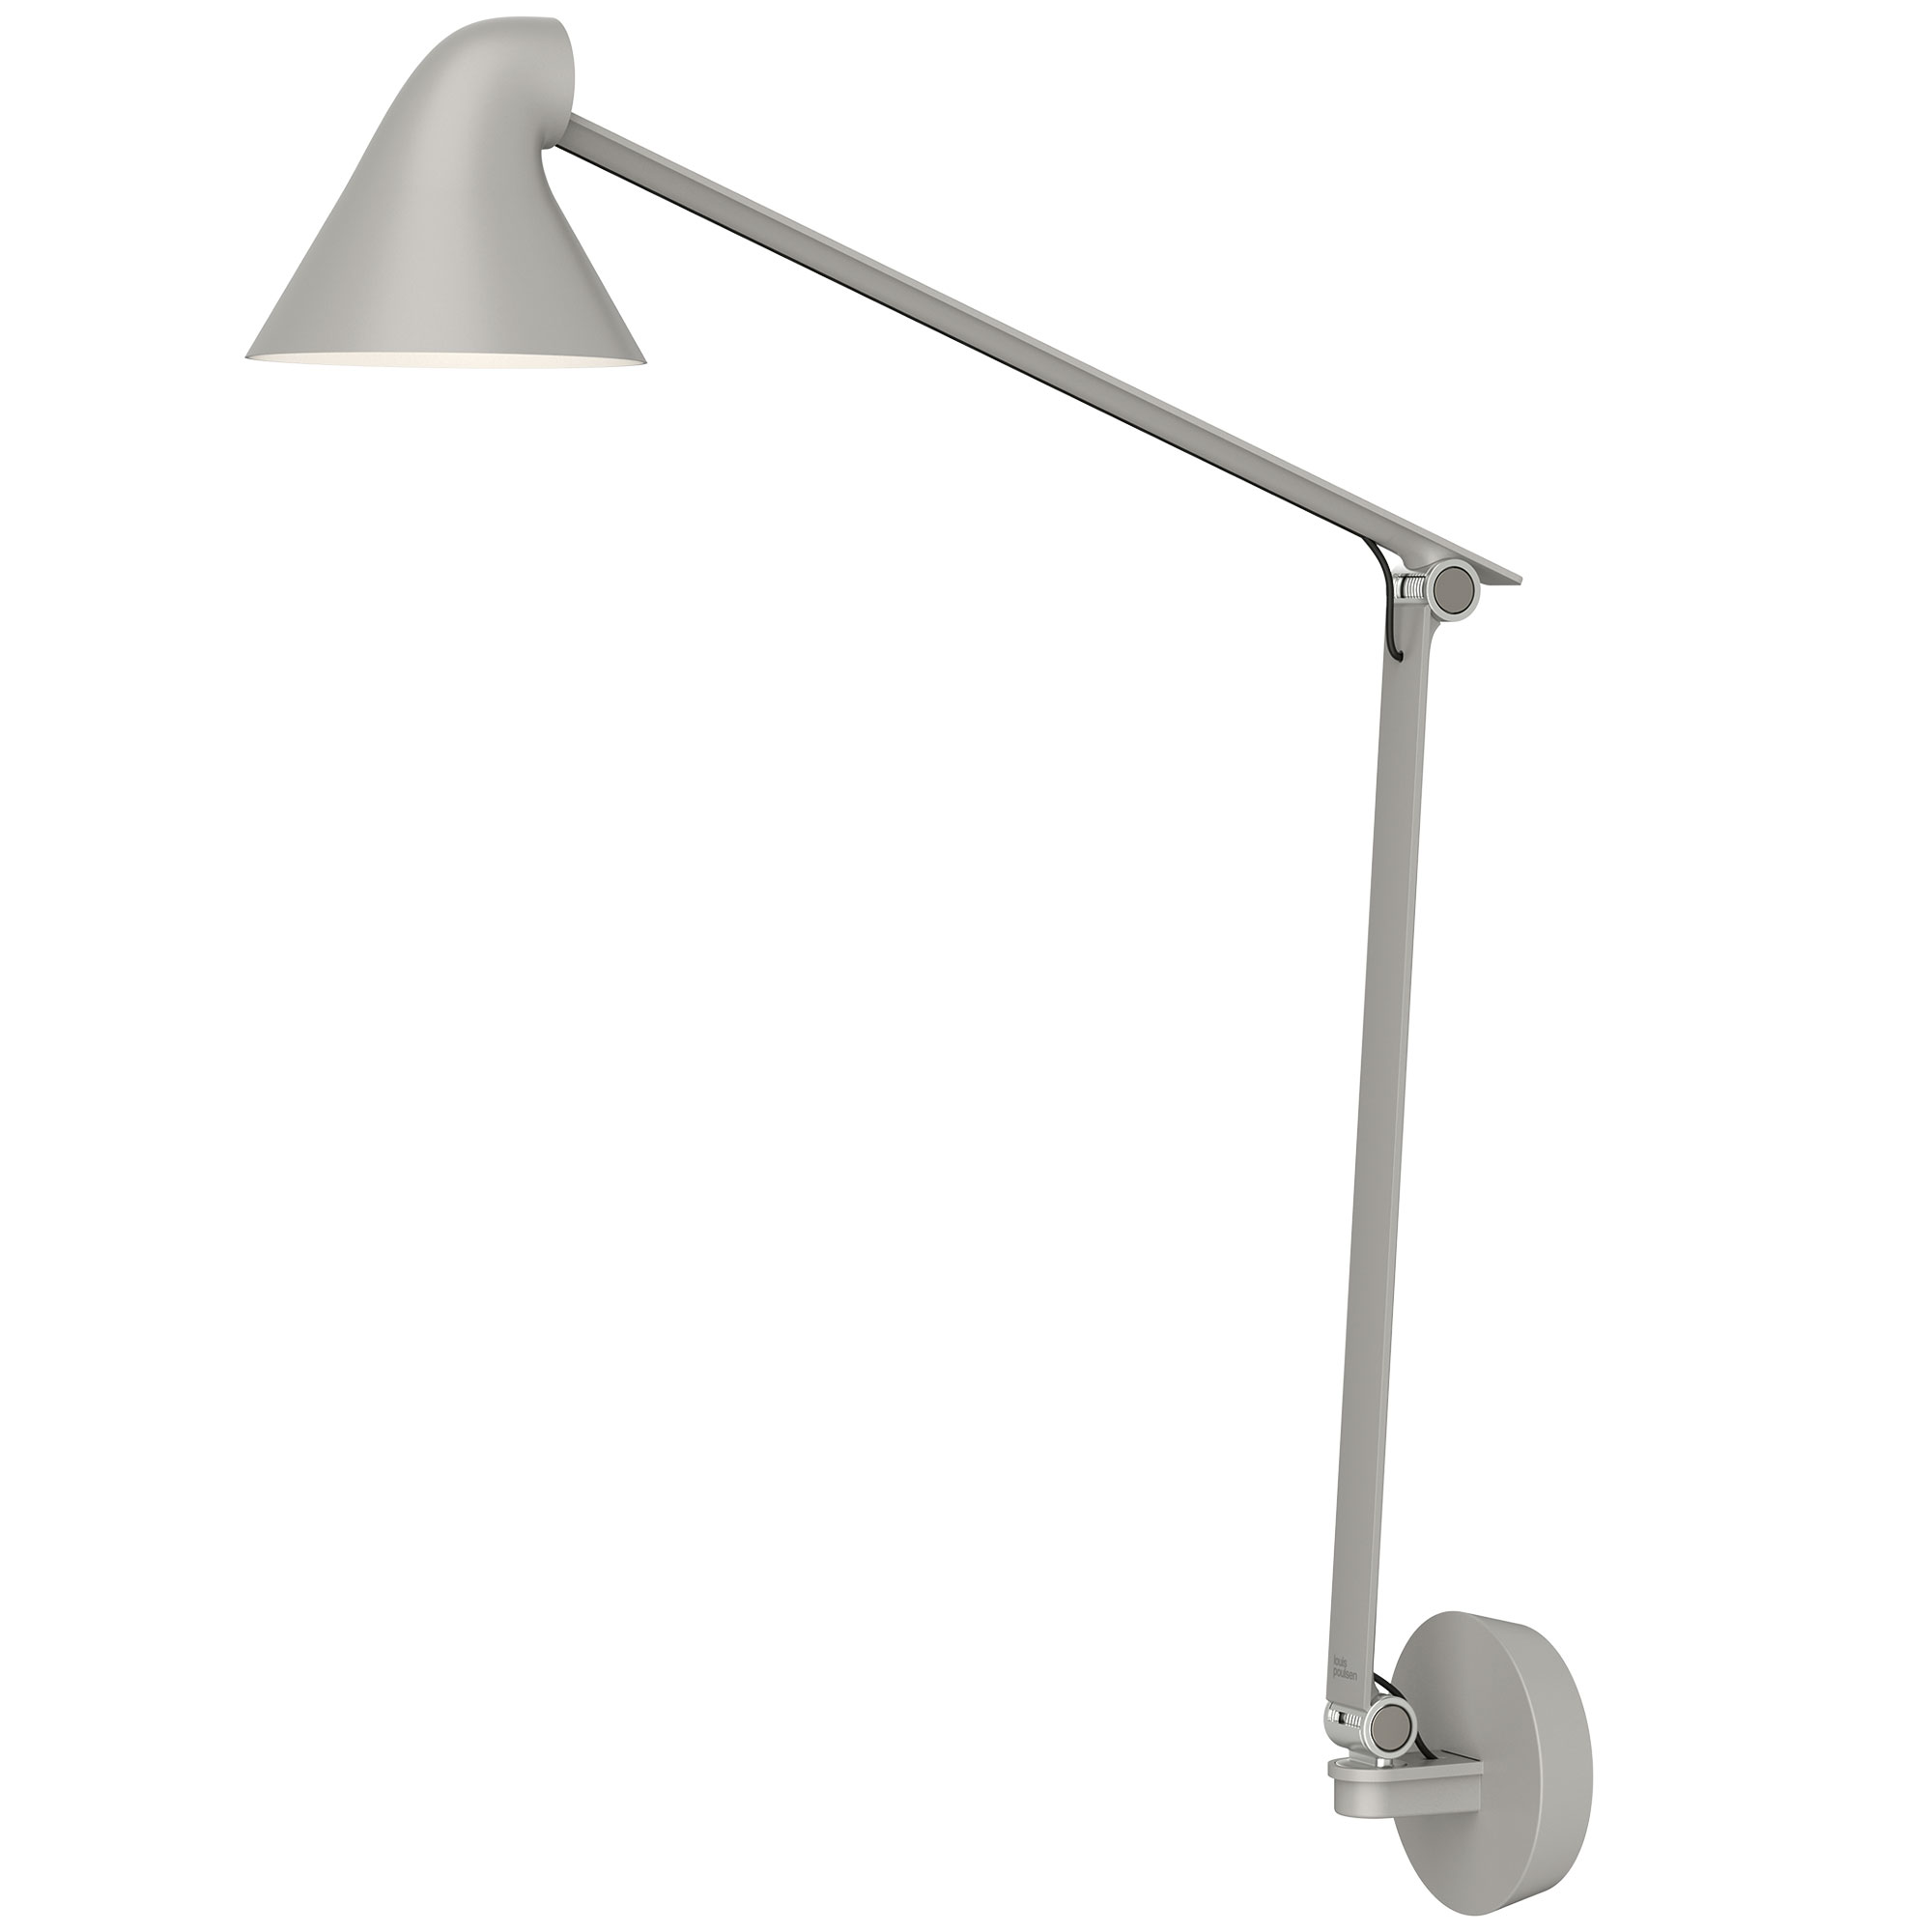 Louis Poulsen - NJP Table Lamp designed by nendo. A new